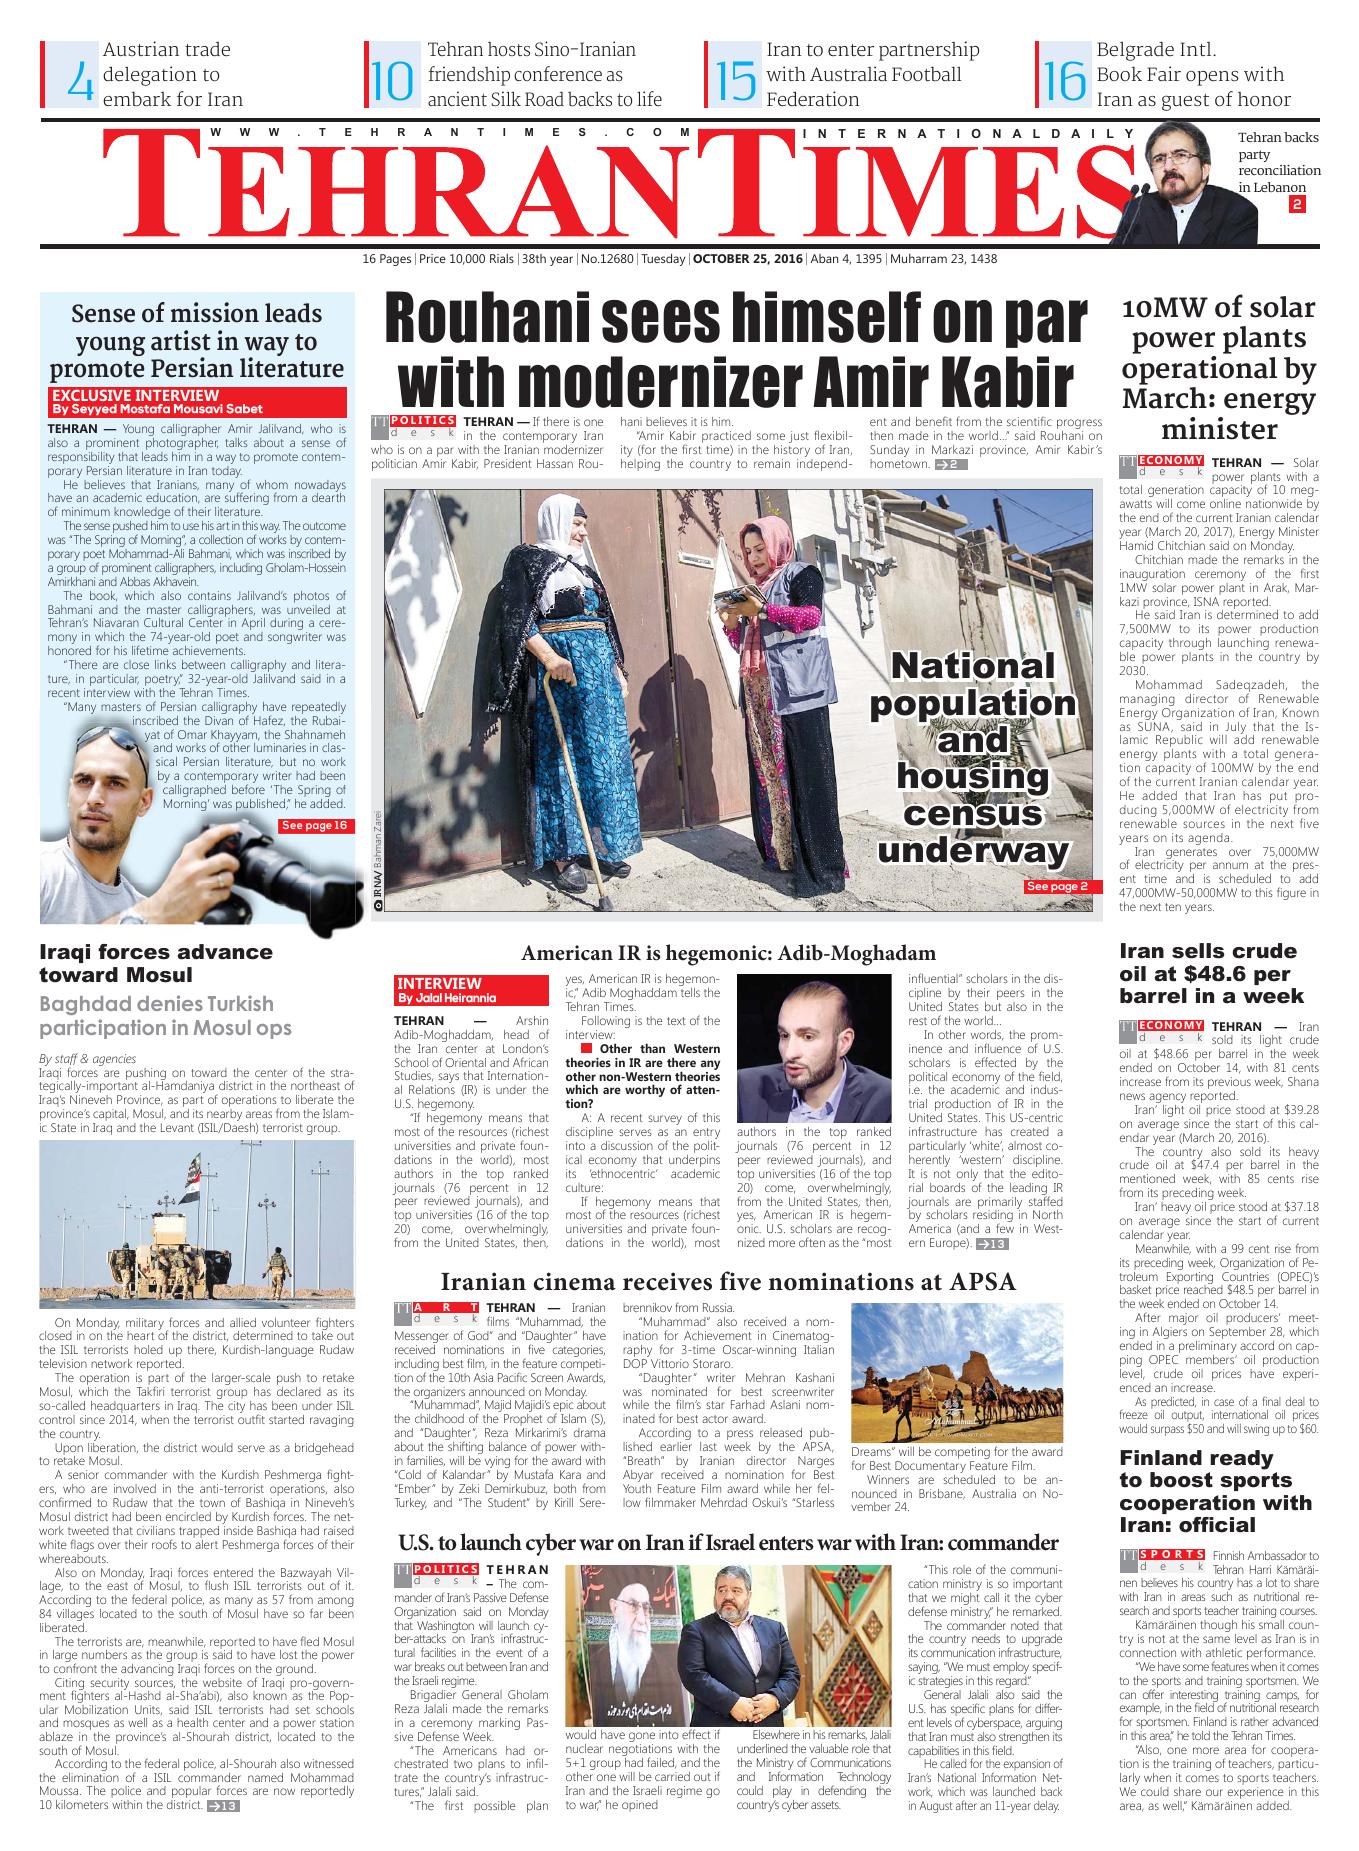 Tehran Times, Frontpage